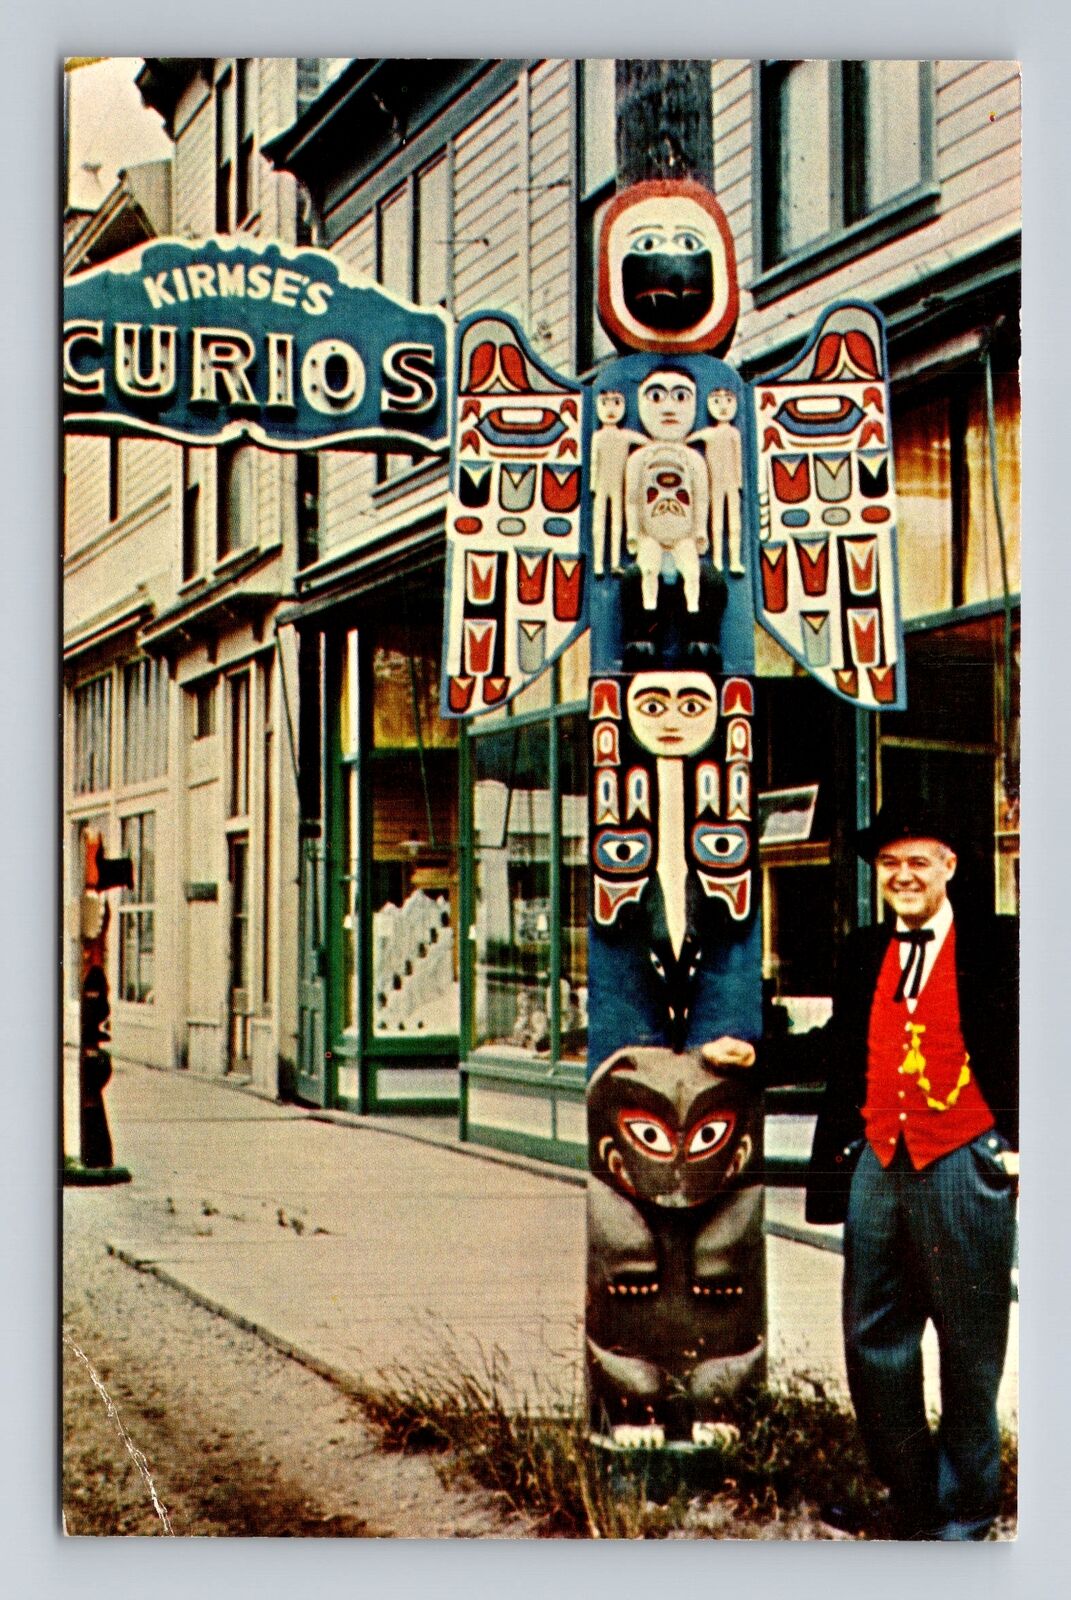 Skagway AK-Alaska, Kirmse's Curio Store Large Gold Nugget Chain Vintage Postcard